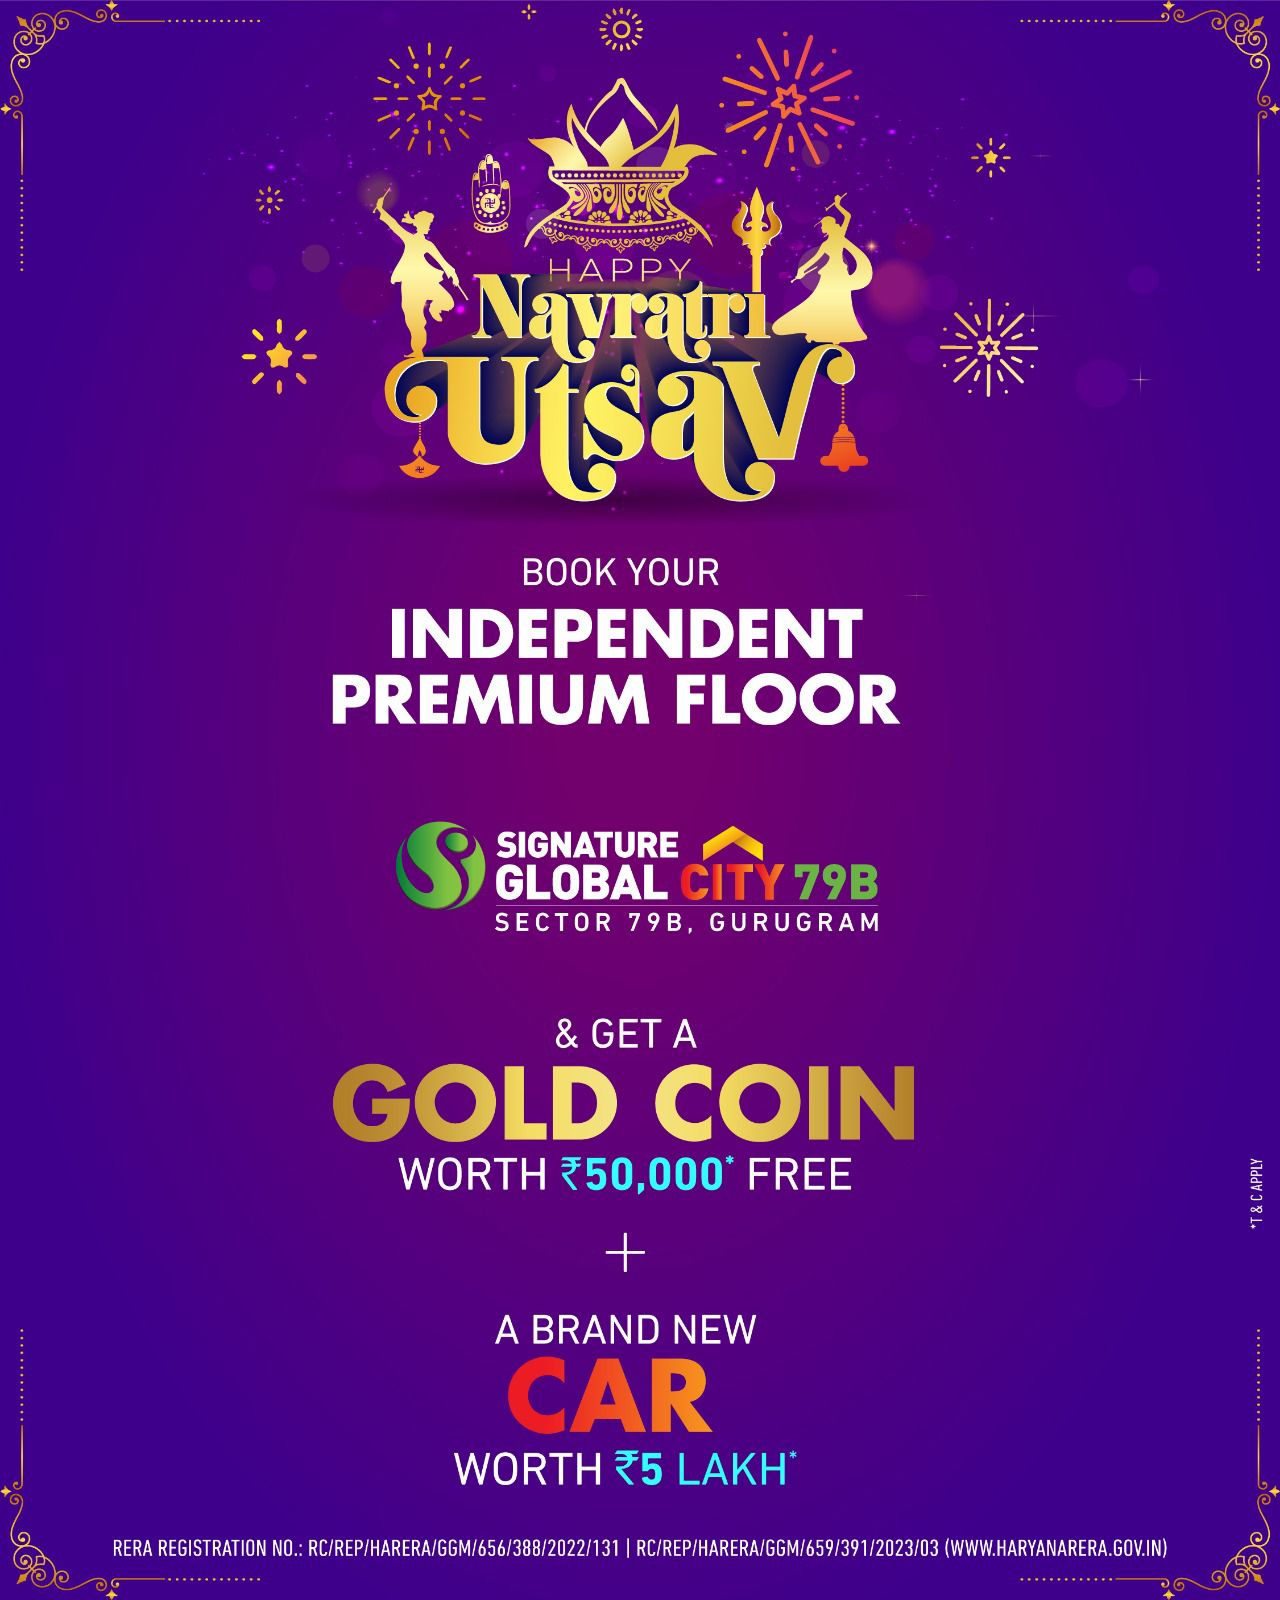 Navratri Ustav Book your independent premium floors at Signature Global City 79B, Sector 79B, Gurgaon Update